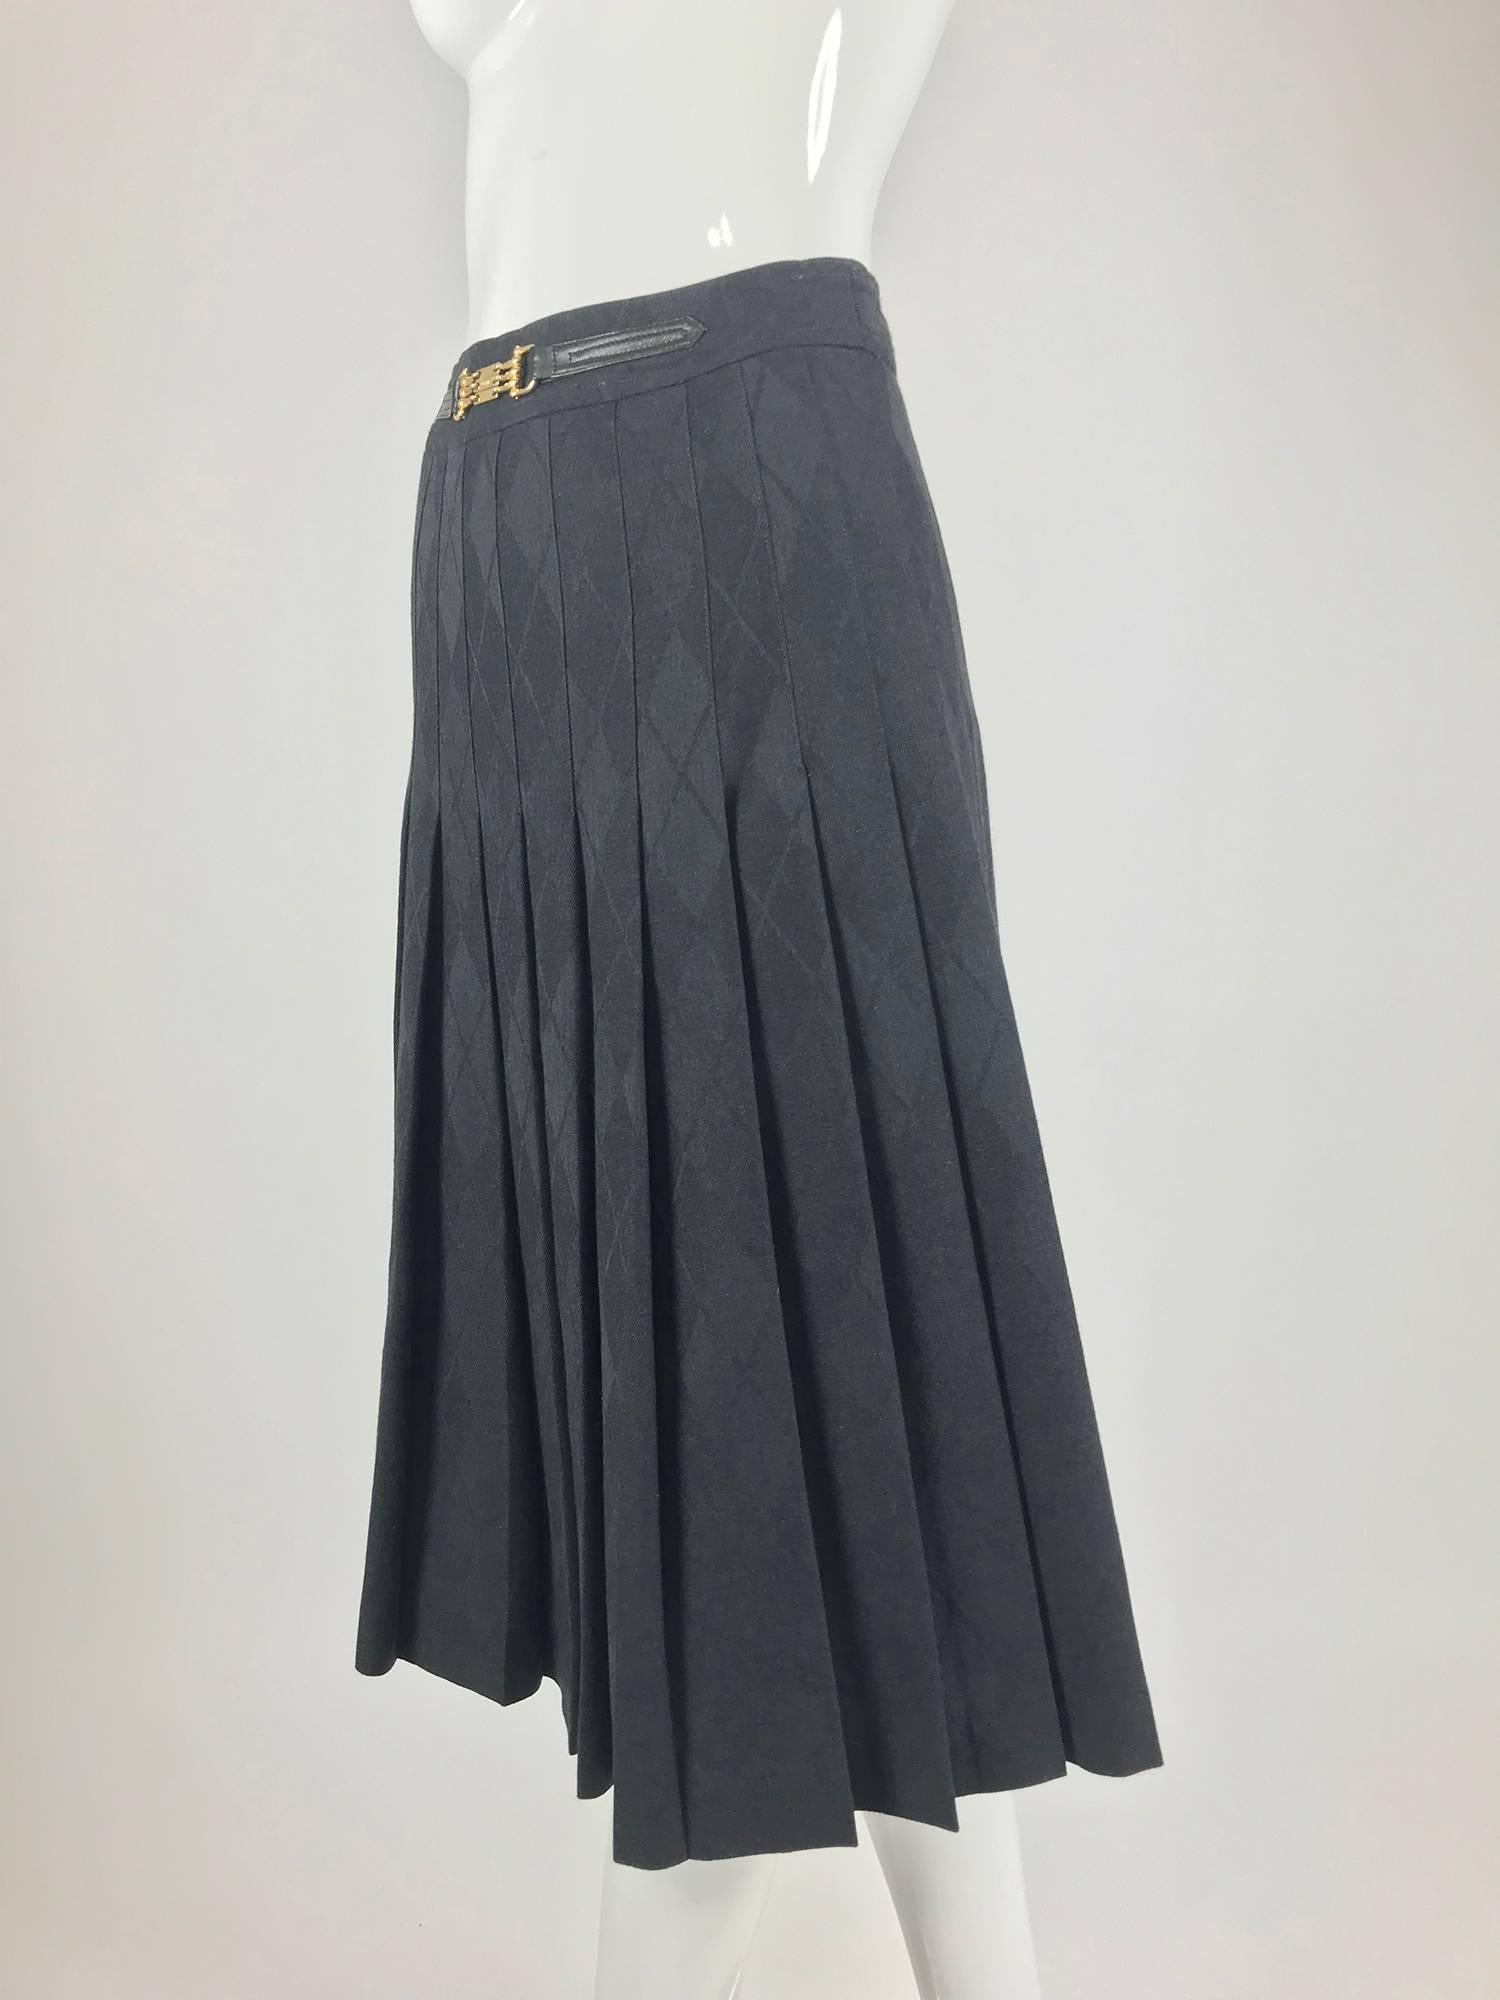 grey wool pleated skirt